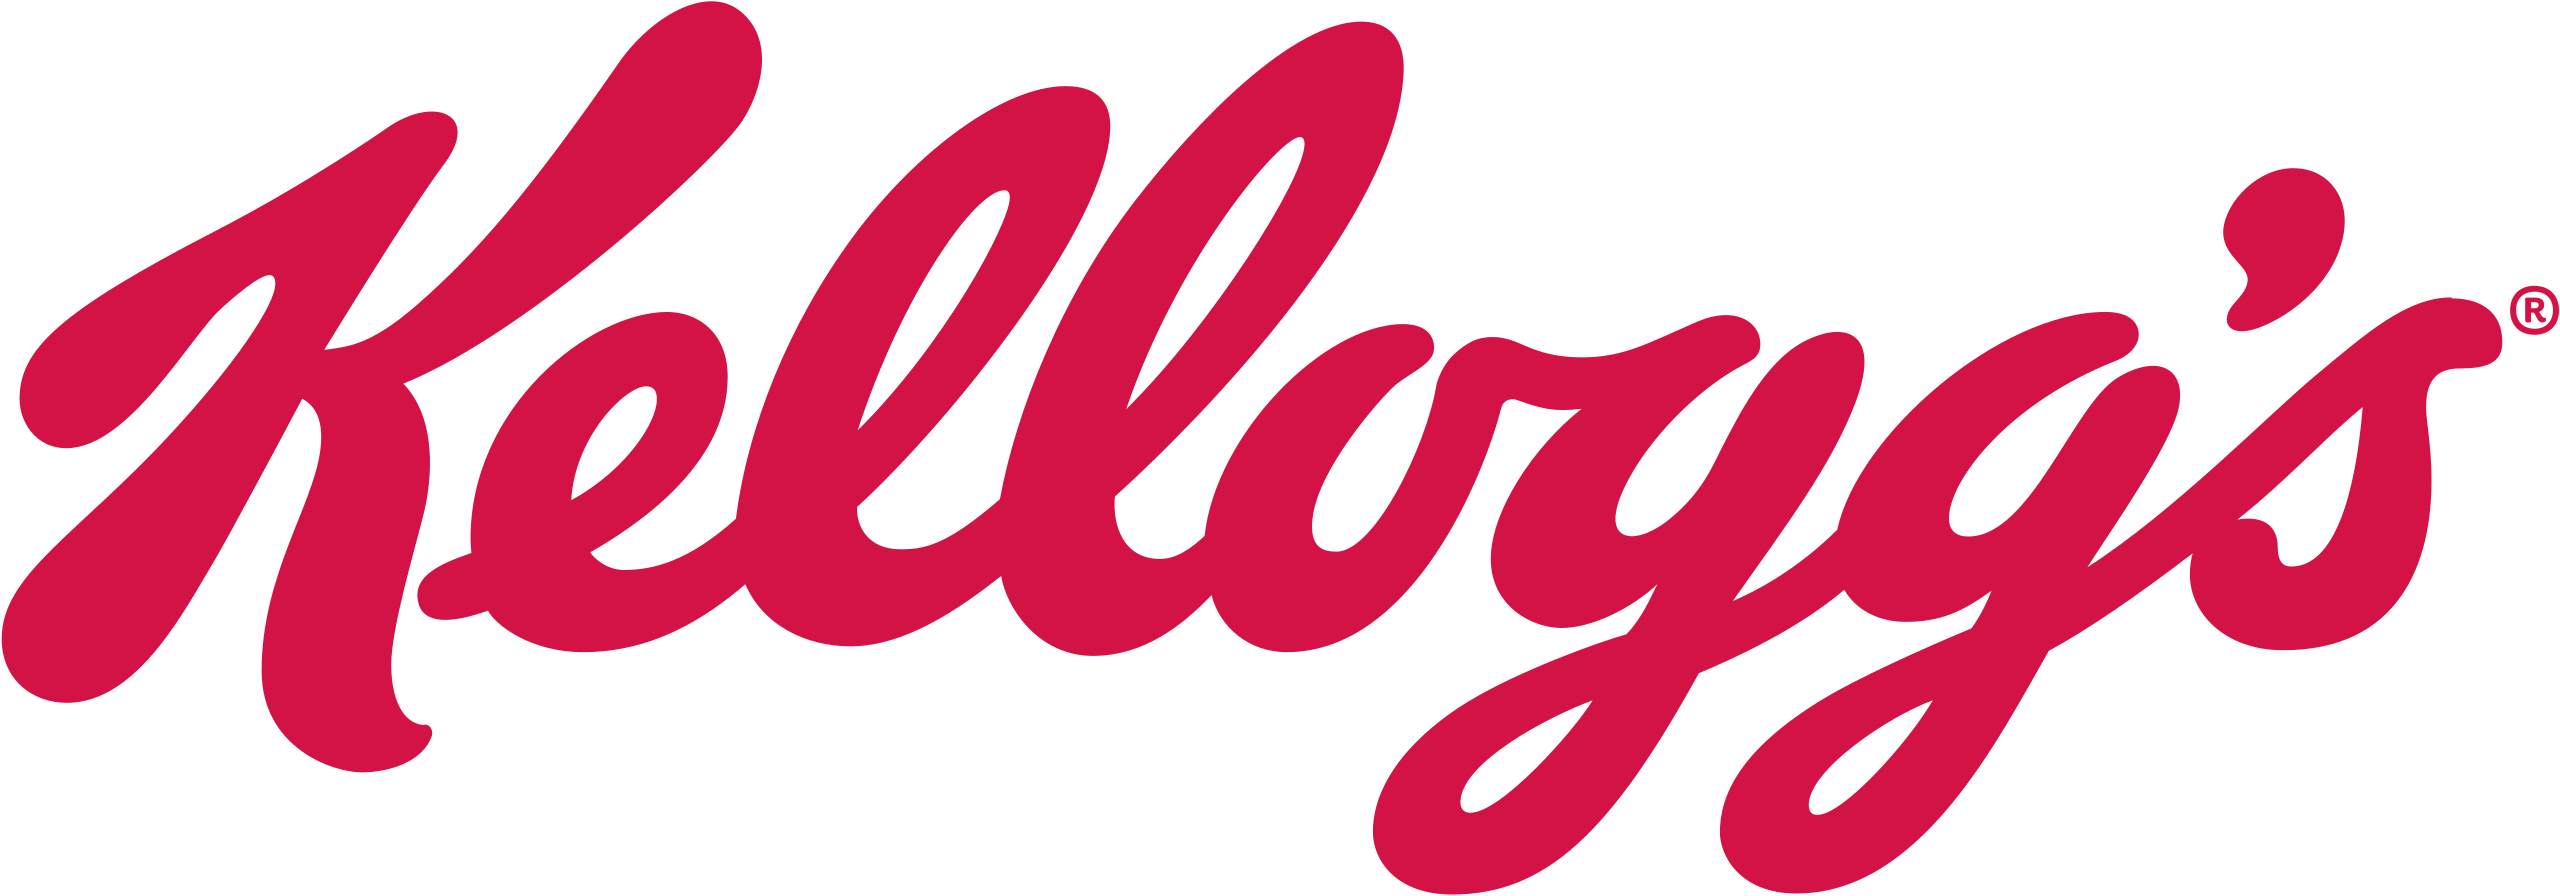 Kellogg’s-Logo.svg